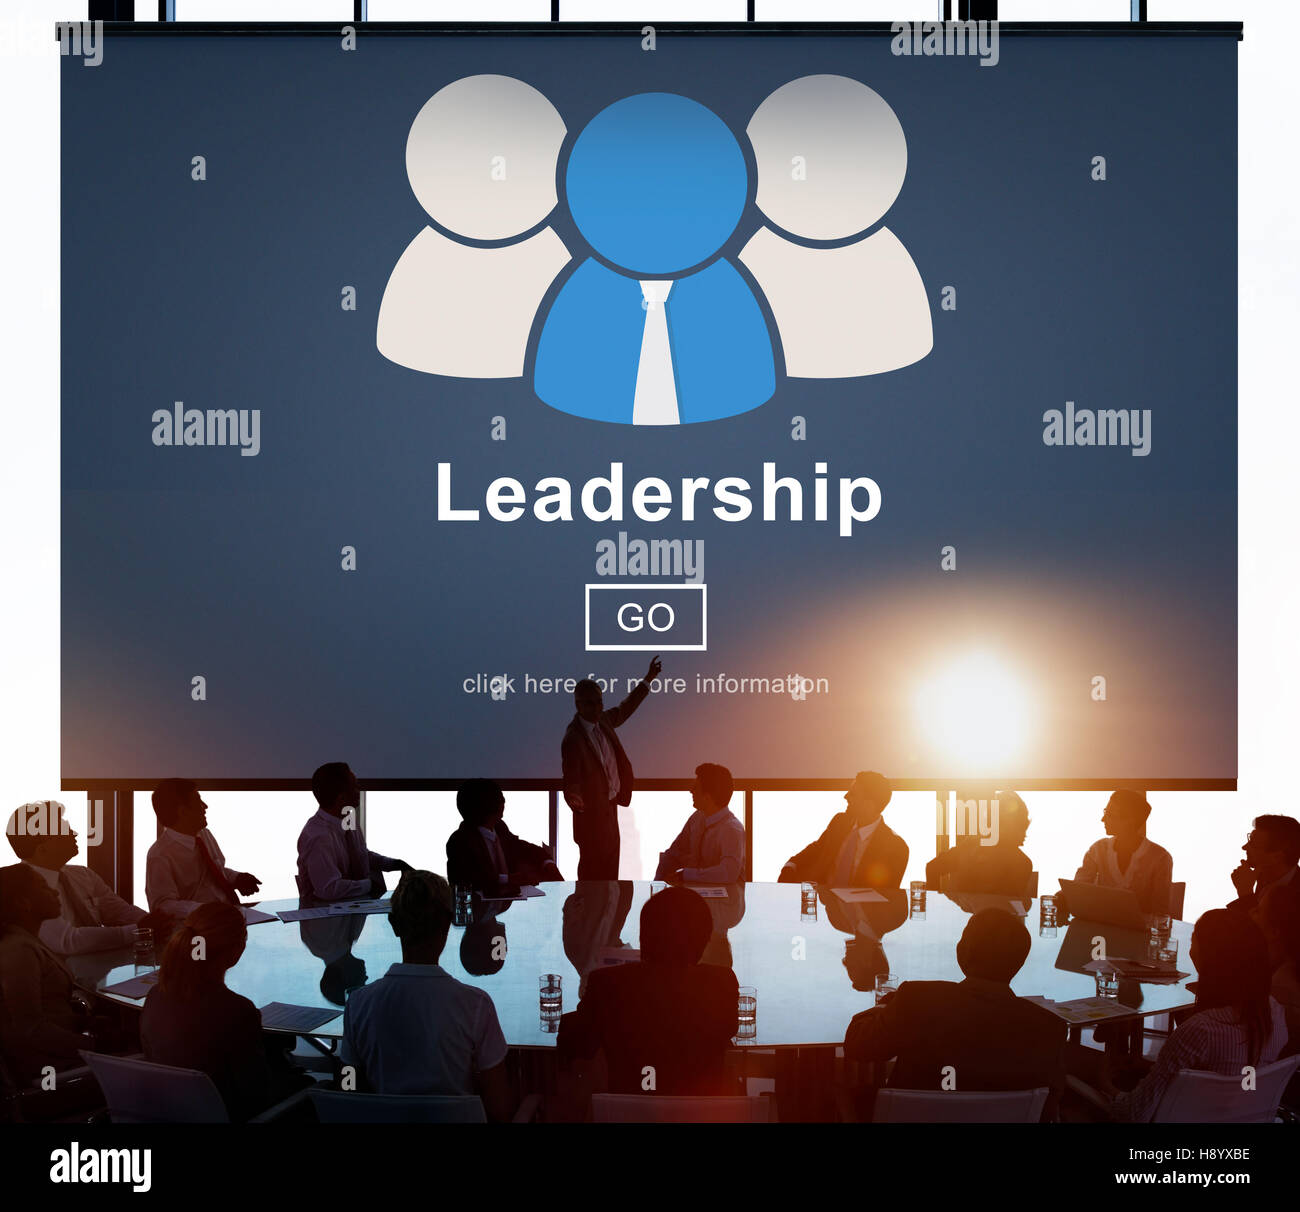 Leadership Boss Coach Director Authoritarian Concept Stock Photo